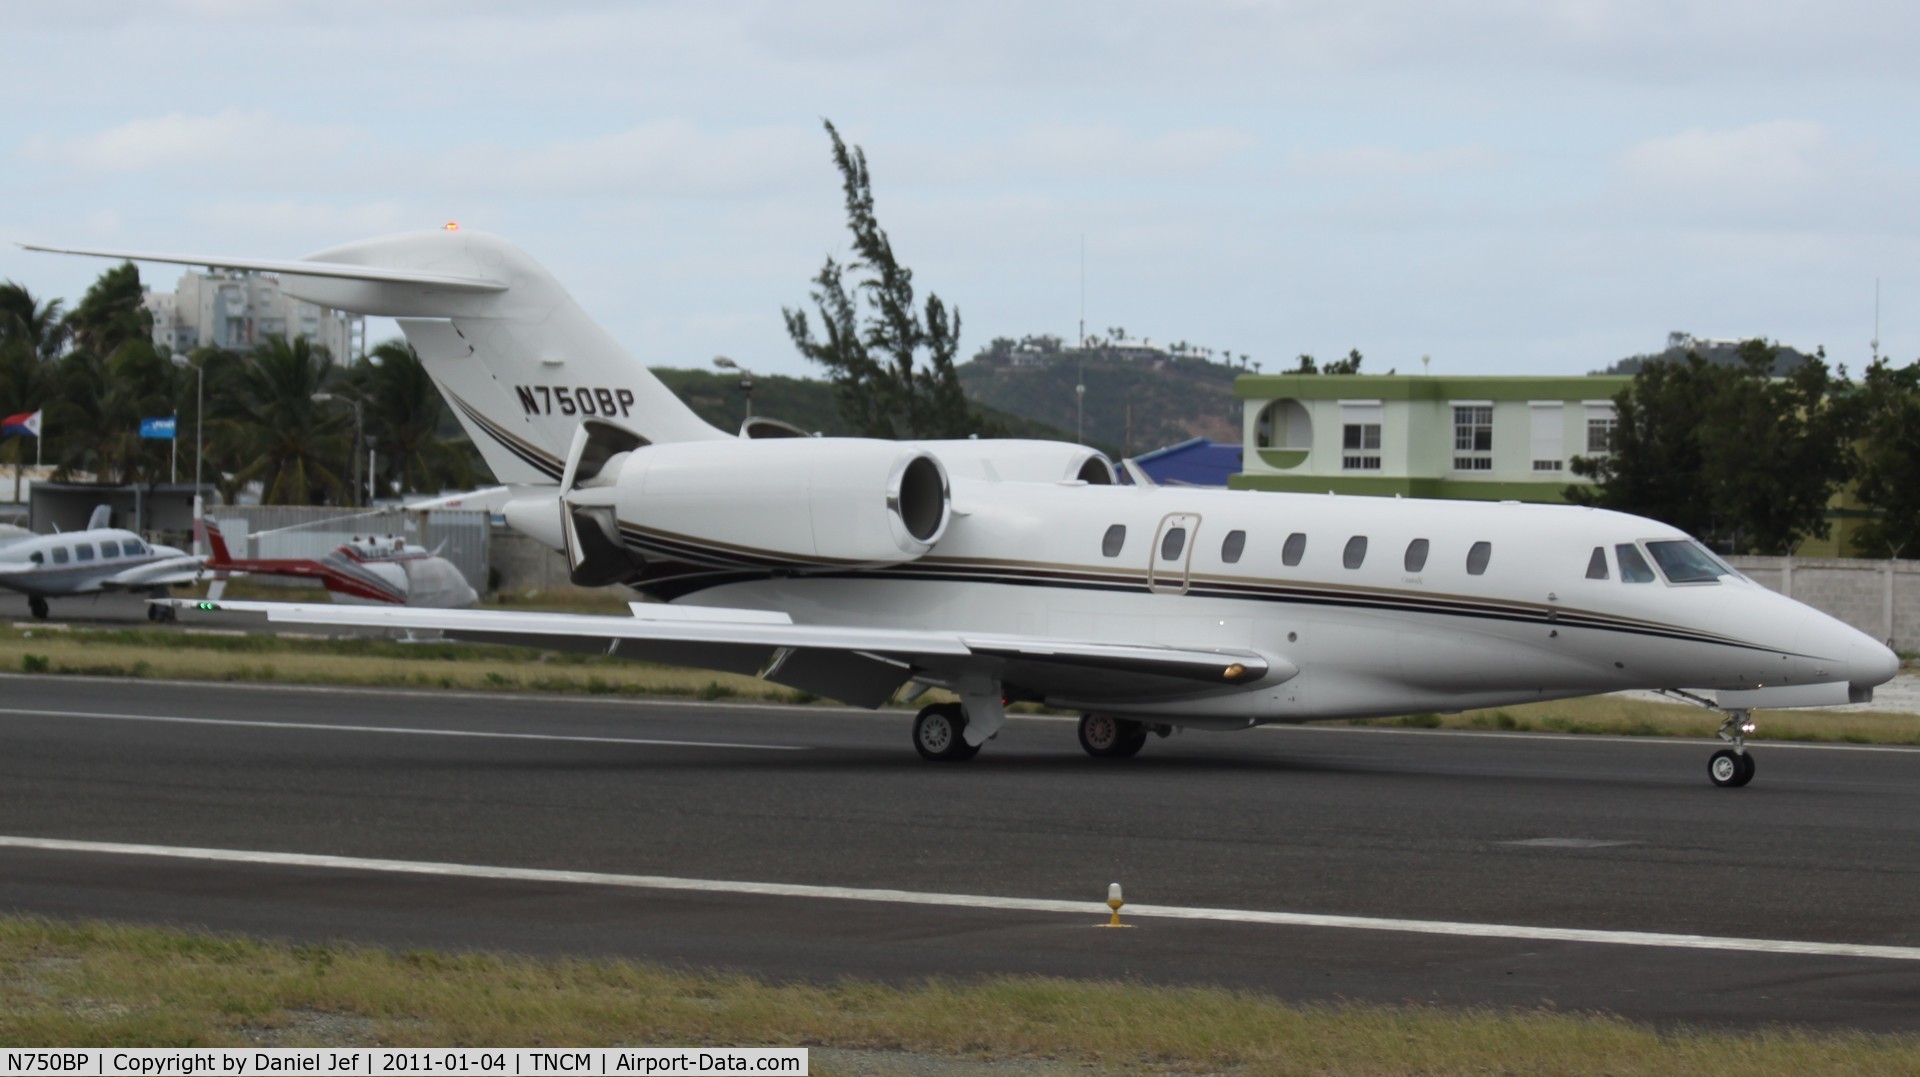 N750BP, 2000 Cessna 750 Citation X C/N 750-0111, N750BP just landed at TNCM